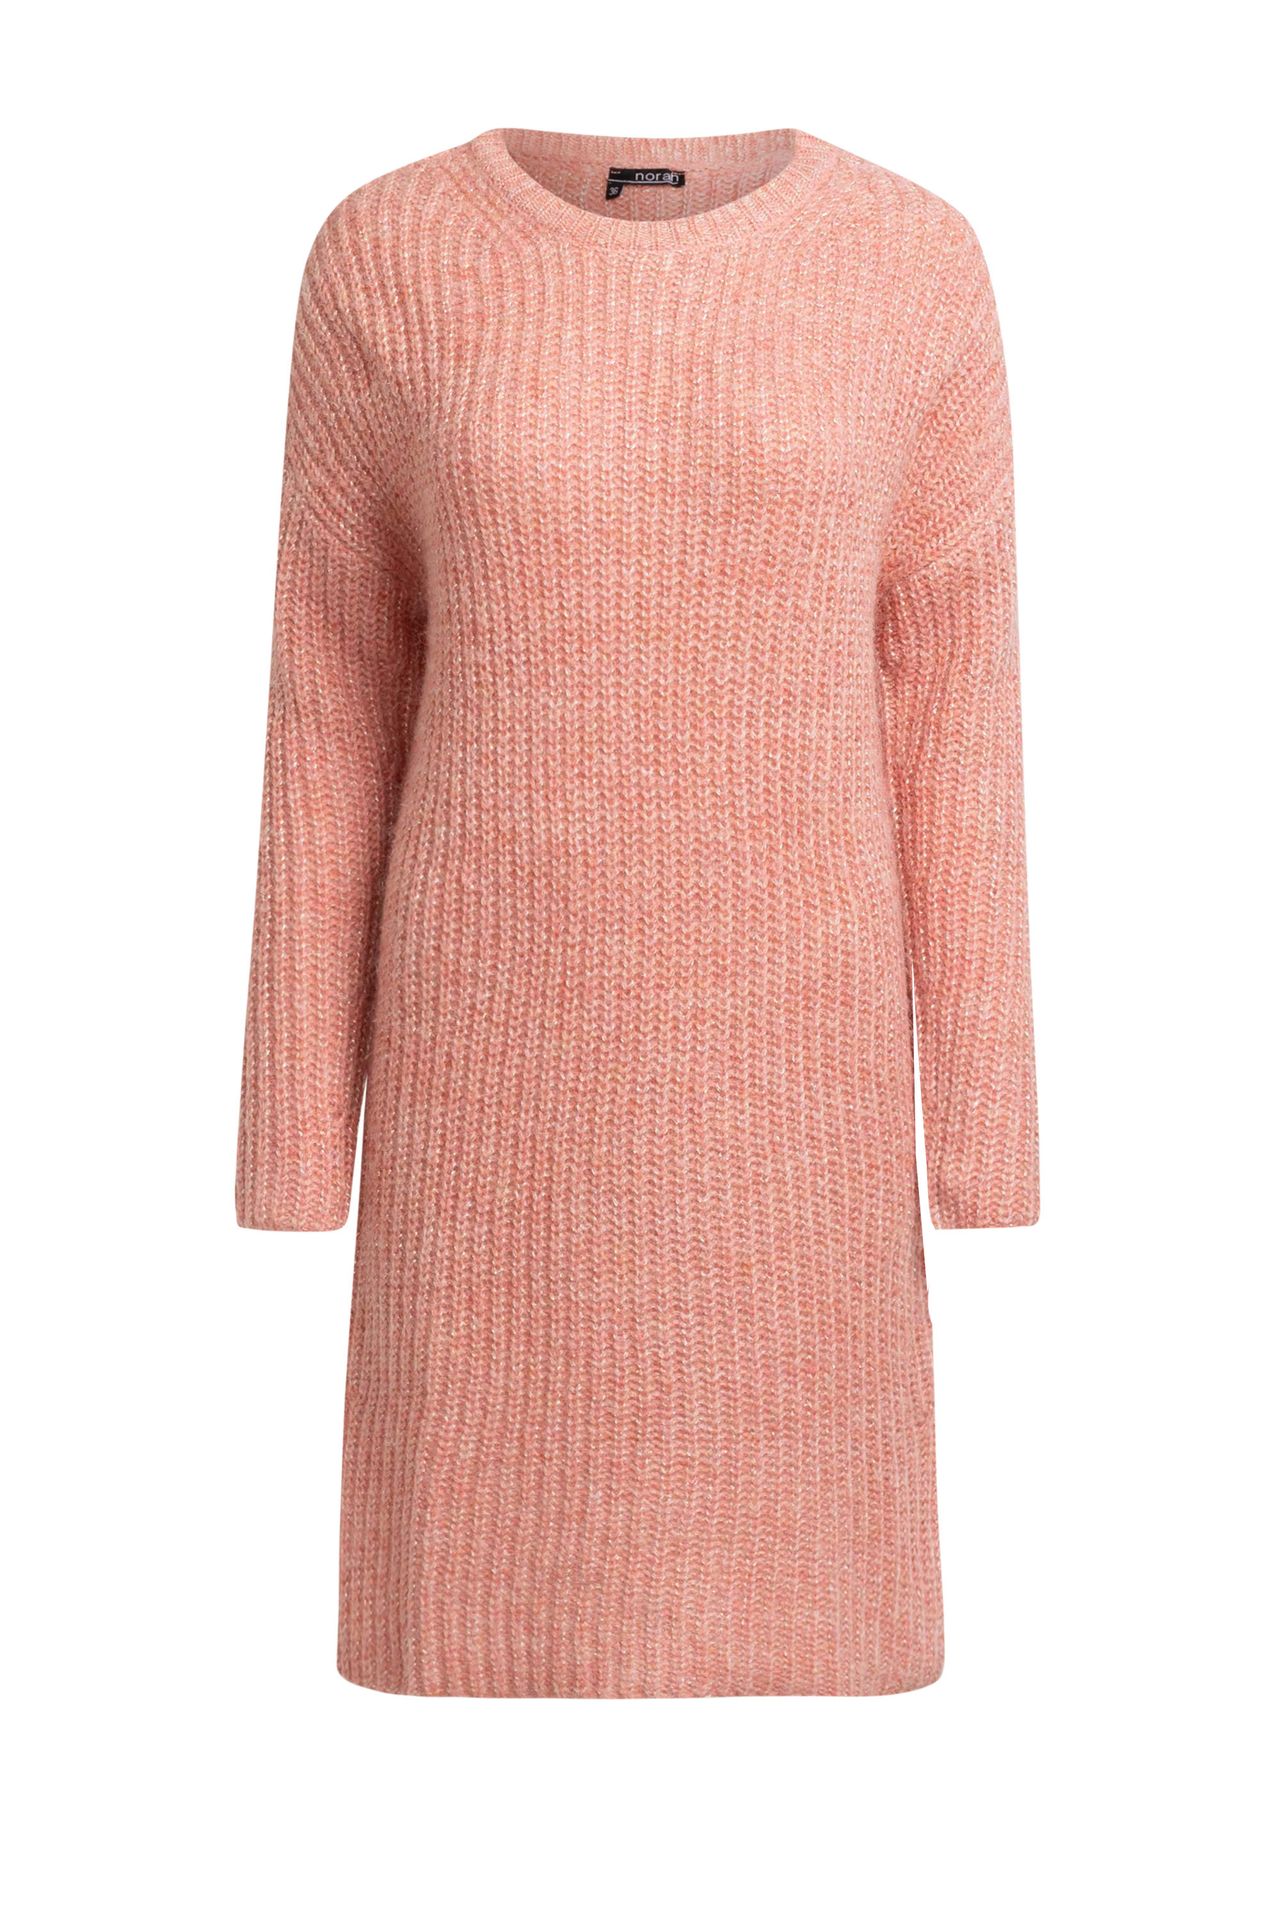  Gebreide jurk roze blush 210585-905-38